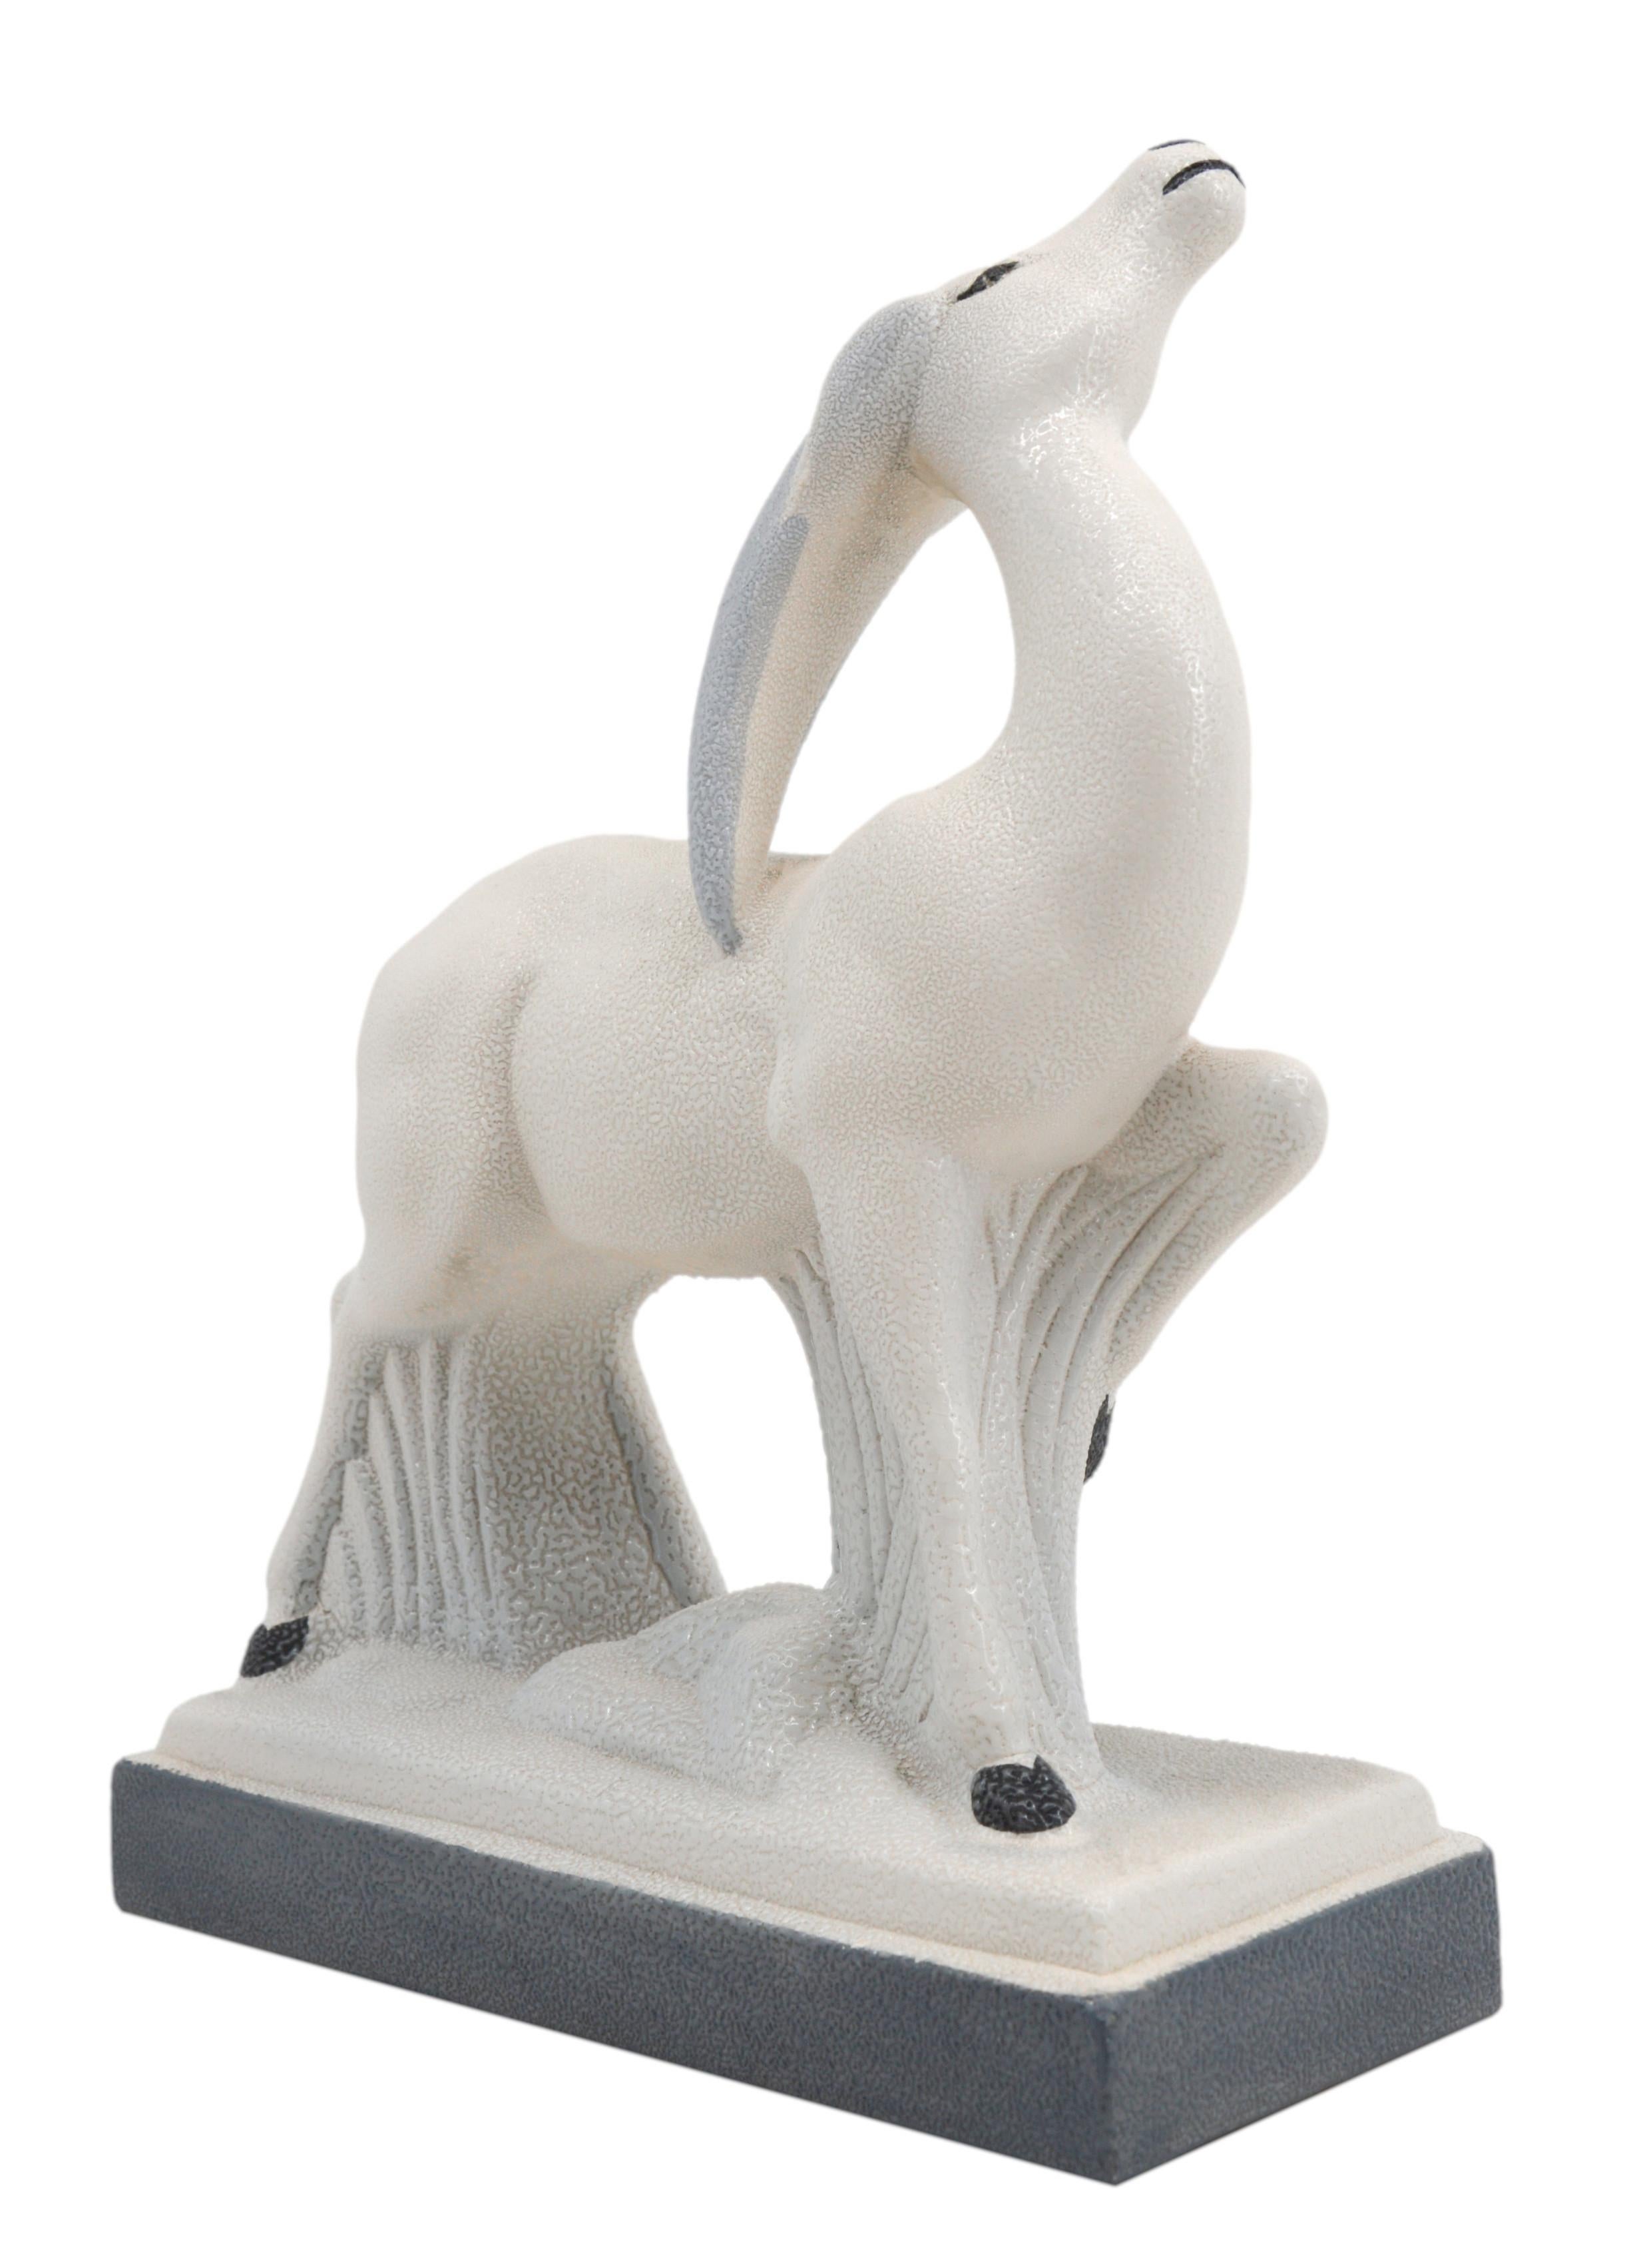 French Art Deco antelope sculpture by Charles Lemanceau at Sainte-Radegonde, France, 1930s. Ceramic sculpture named 